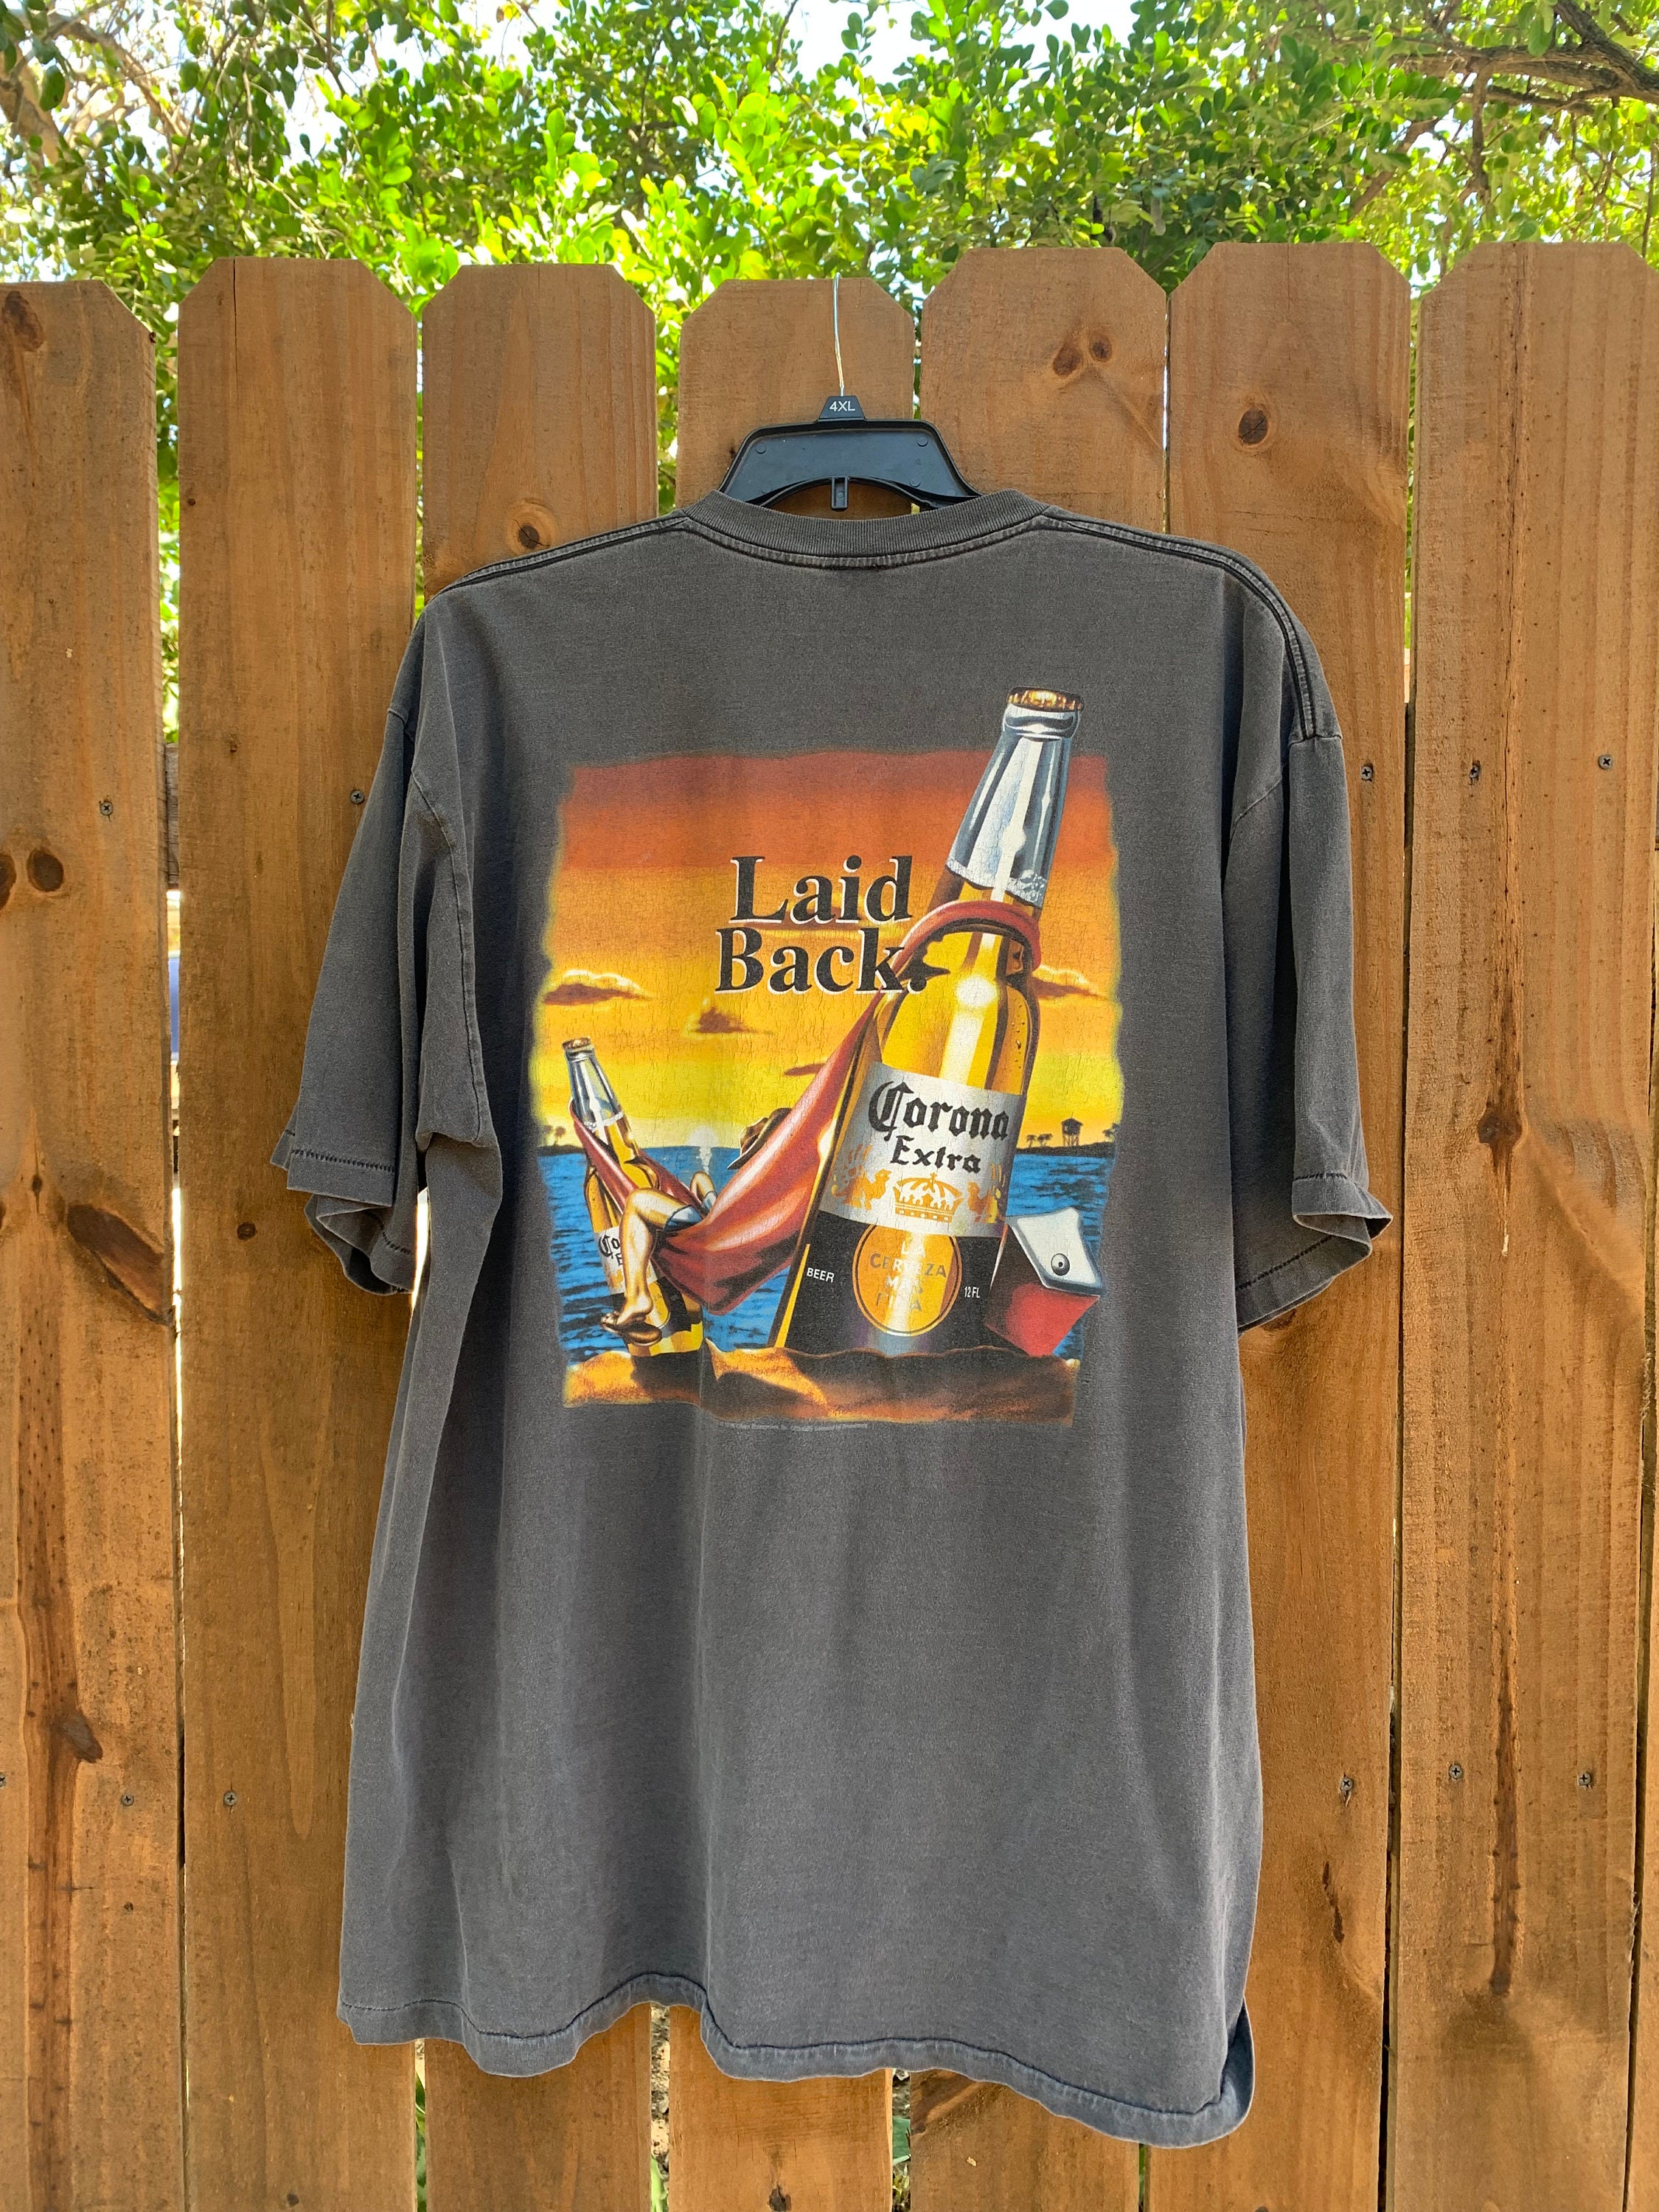 Tee Luv Men's Corona Beer Logo T-Shirt (3XL) 